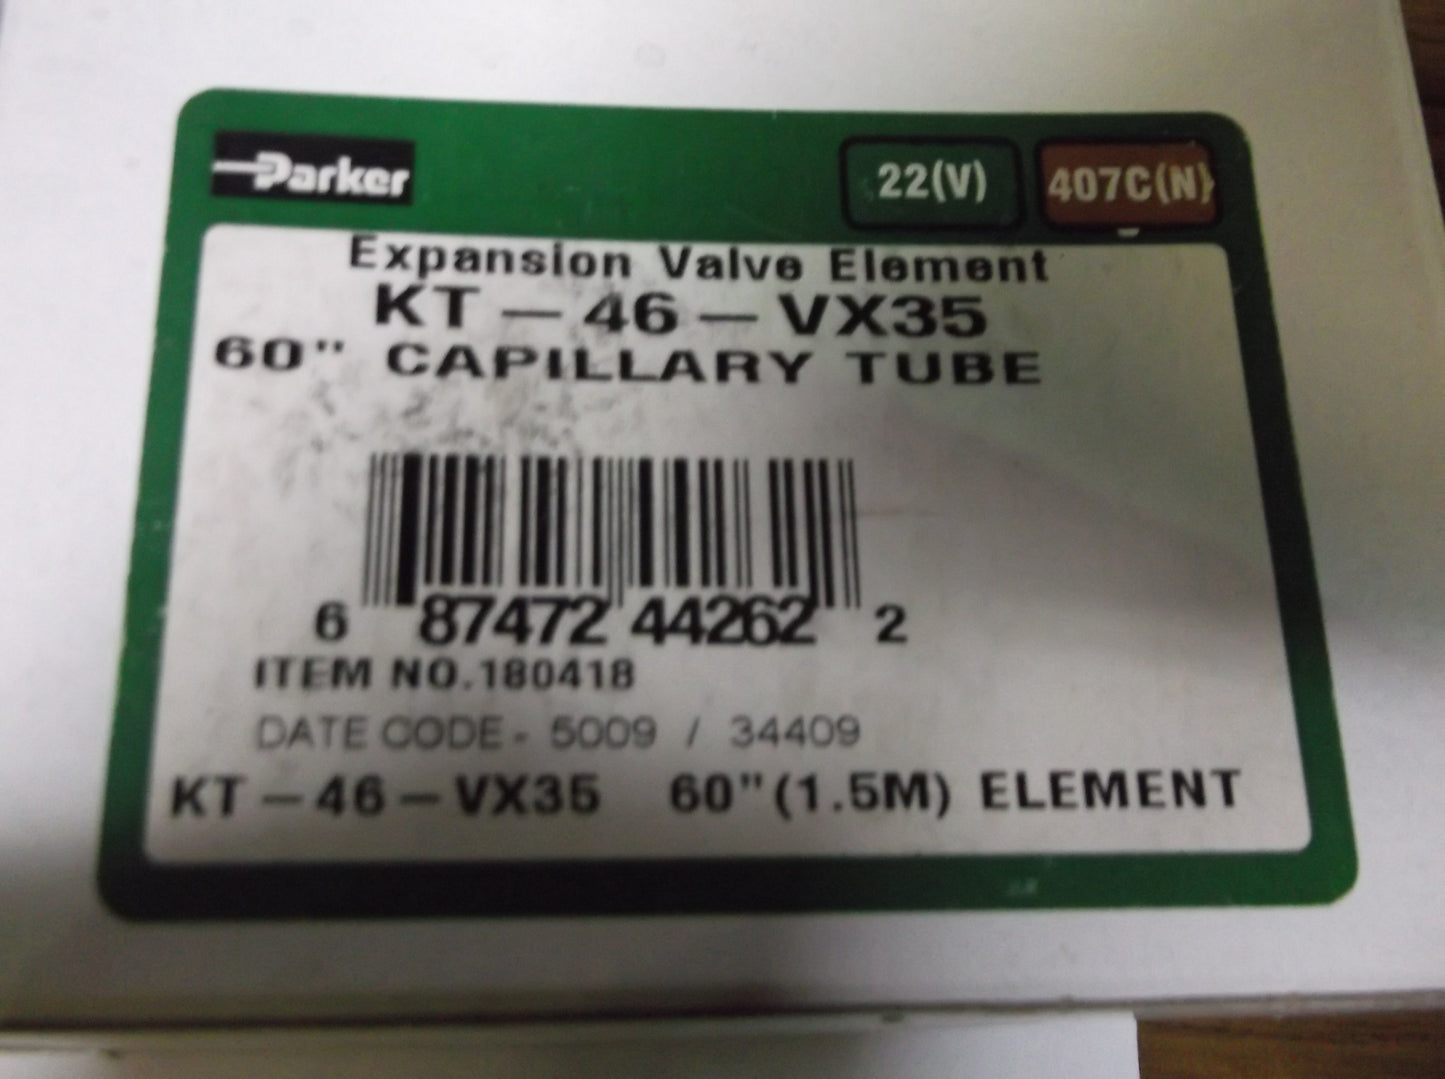 EXPANSION VALVE ELEMENT 60" CAPILLARY TUBE